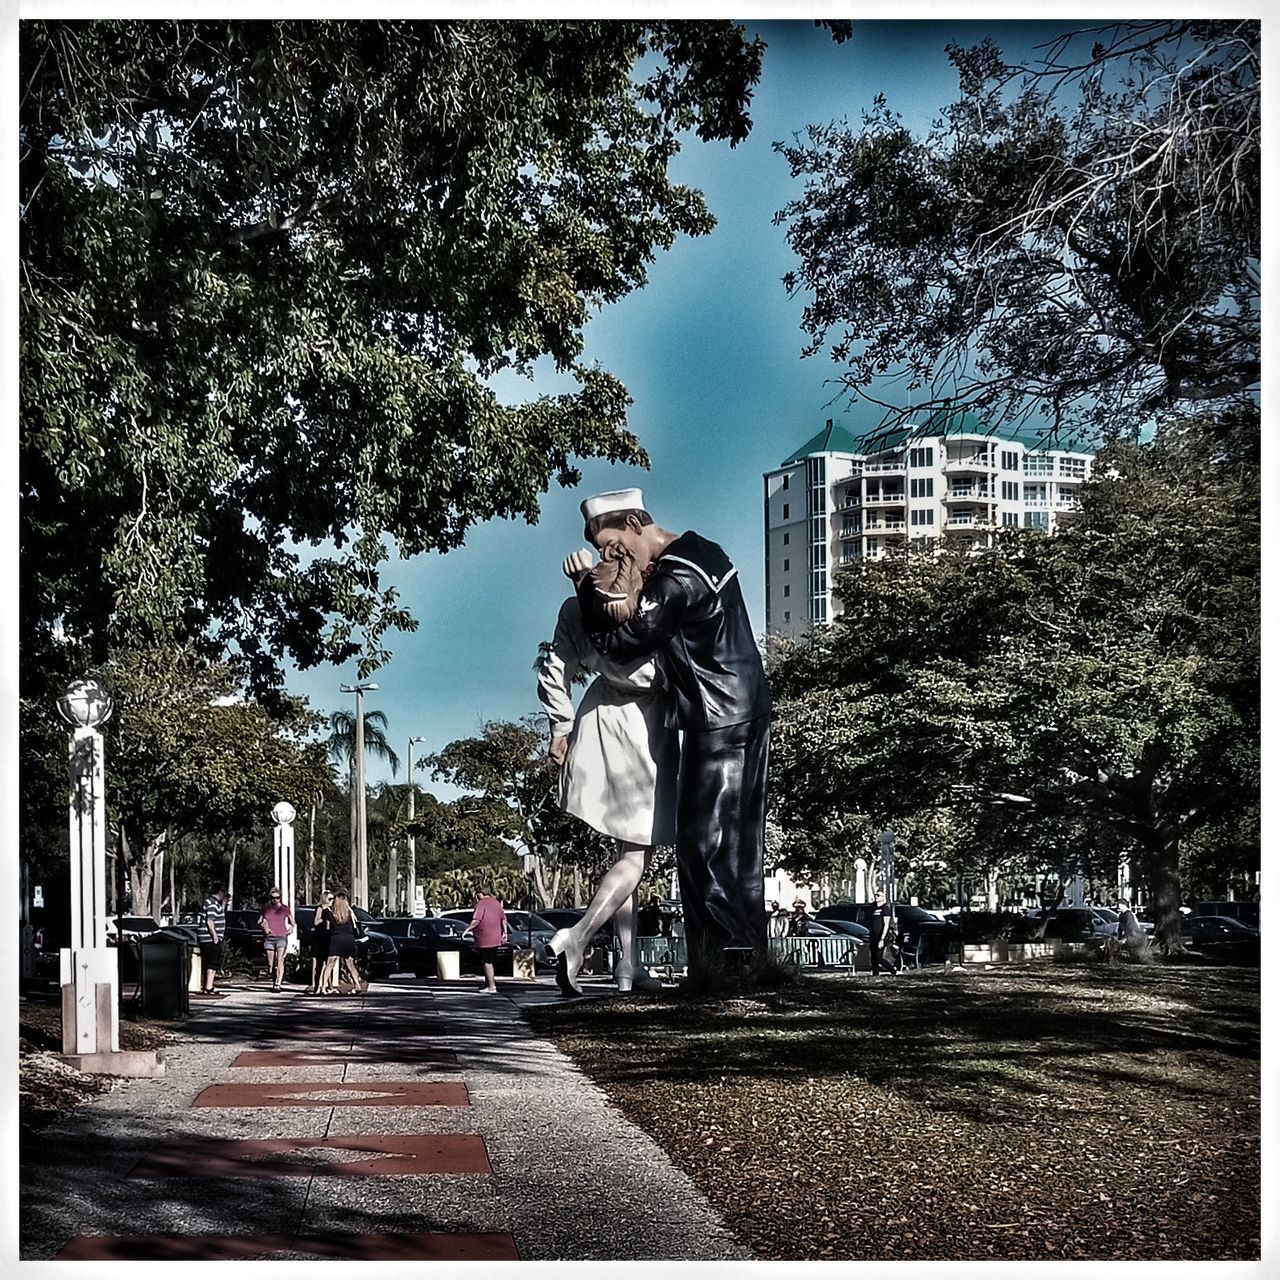 Surrender... Sarasota Florida City Tree Pixelated Men Road Spraying Full Length Street Sky Architecture